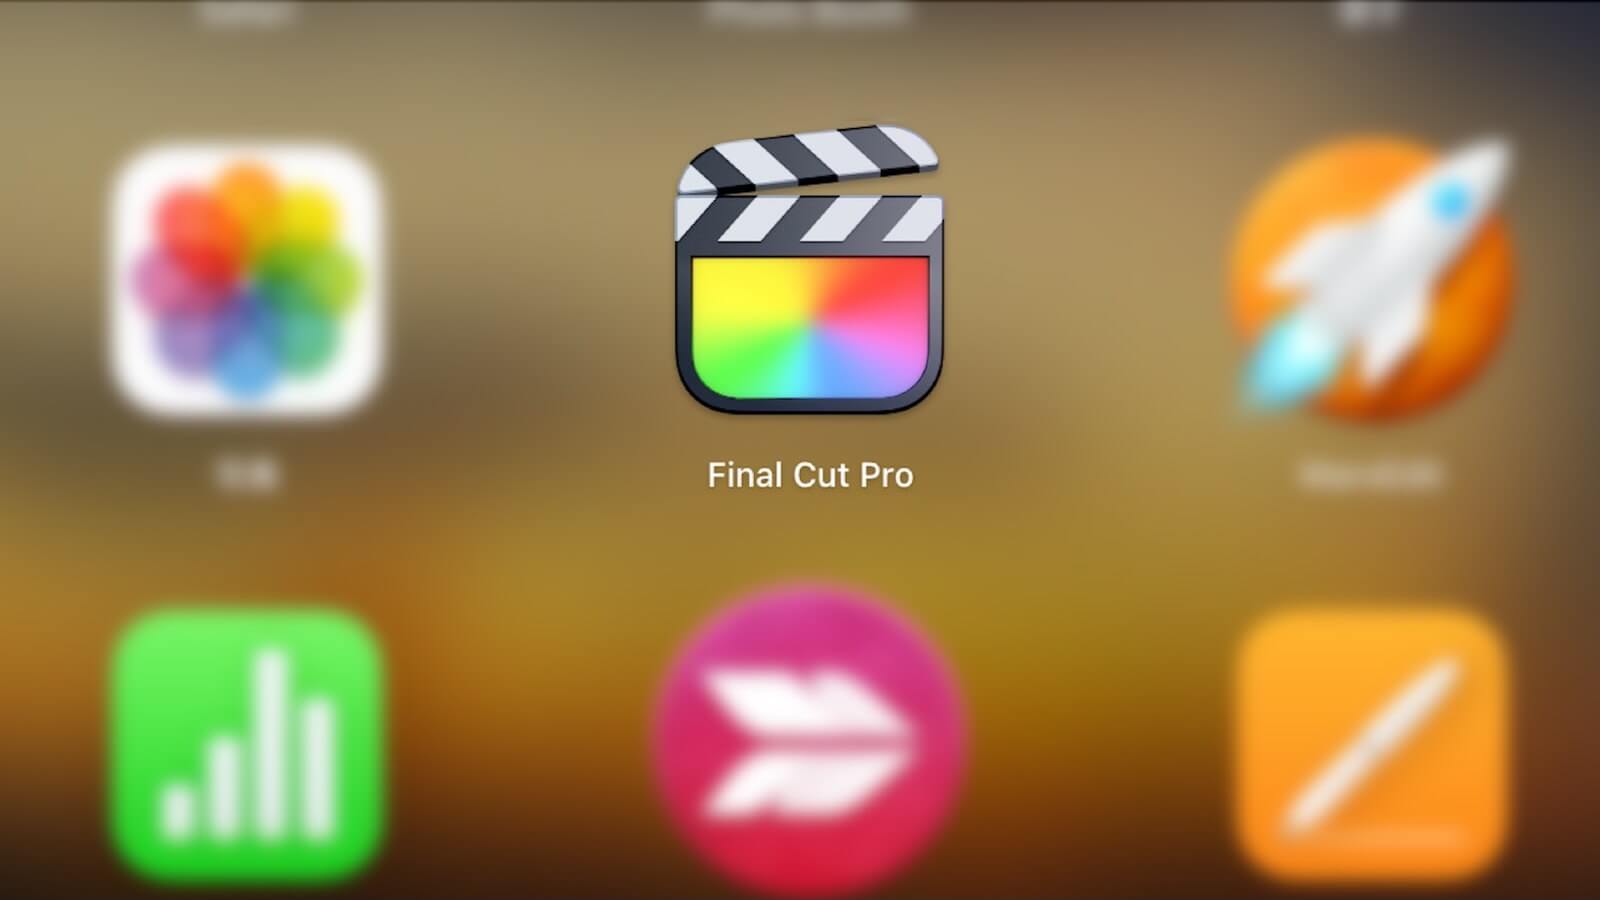 Final Cut Pro logo image